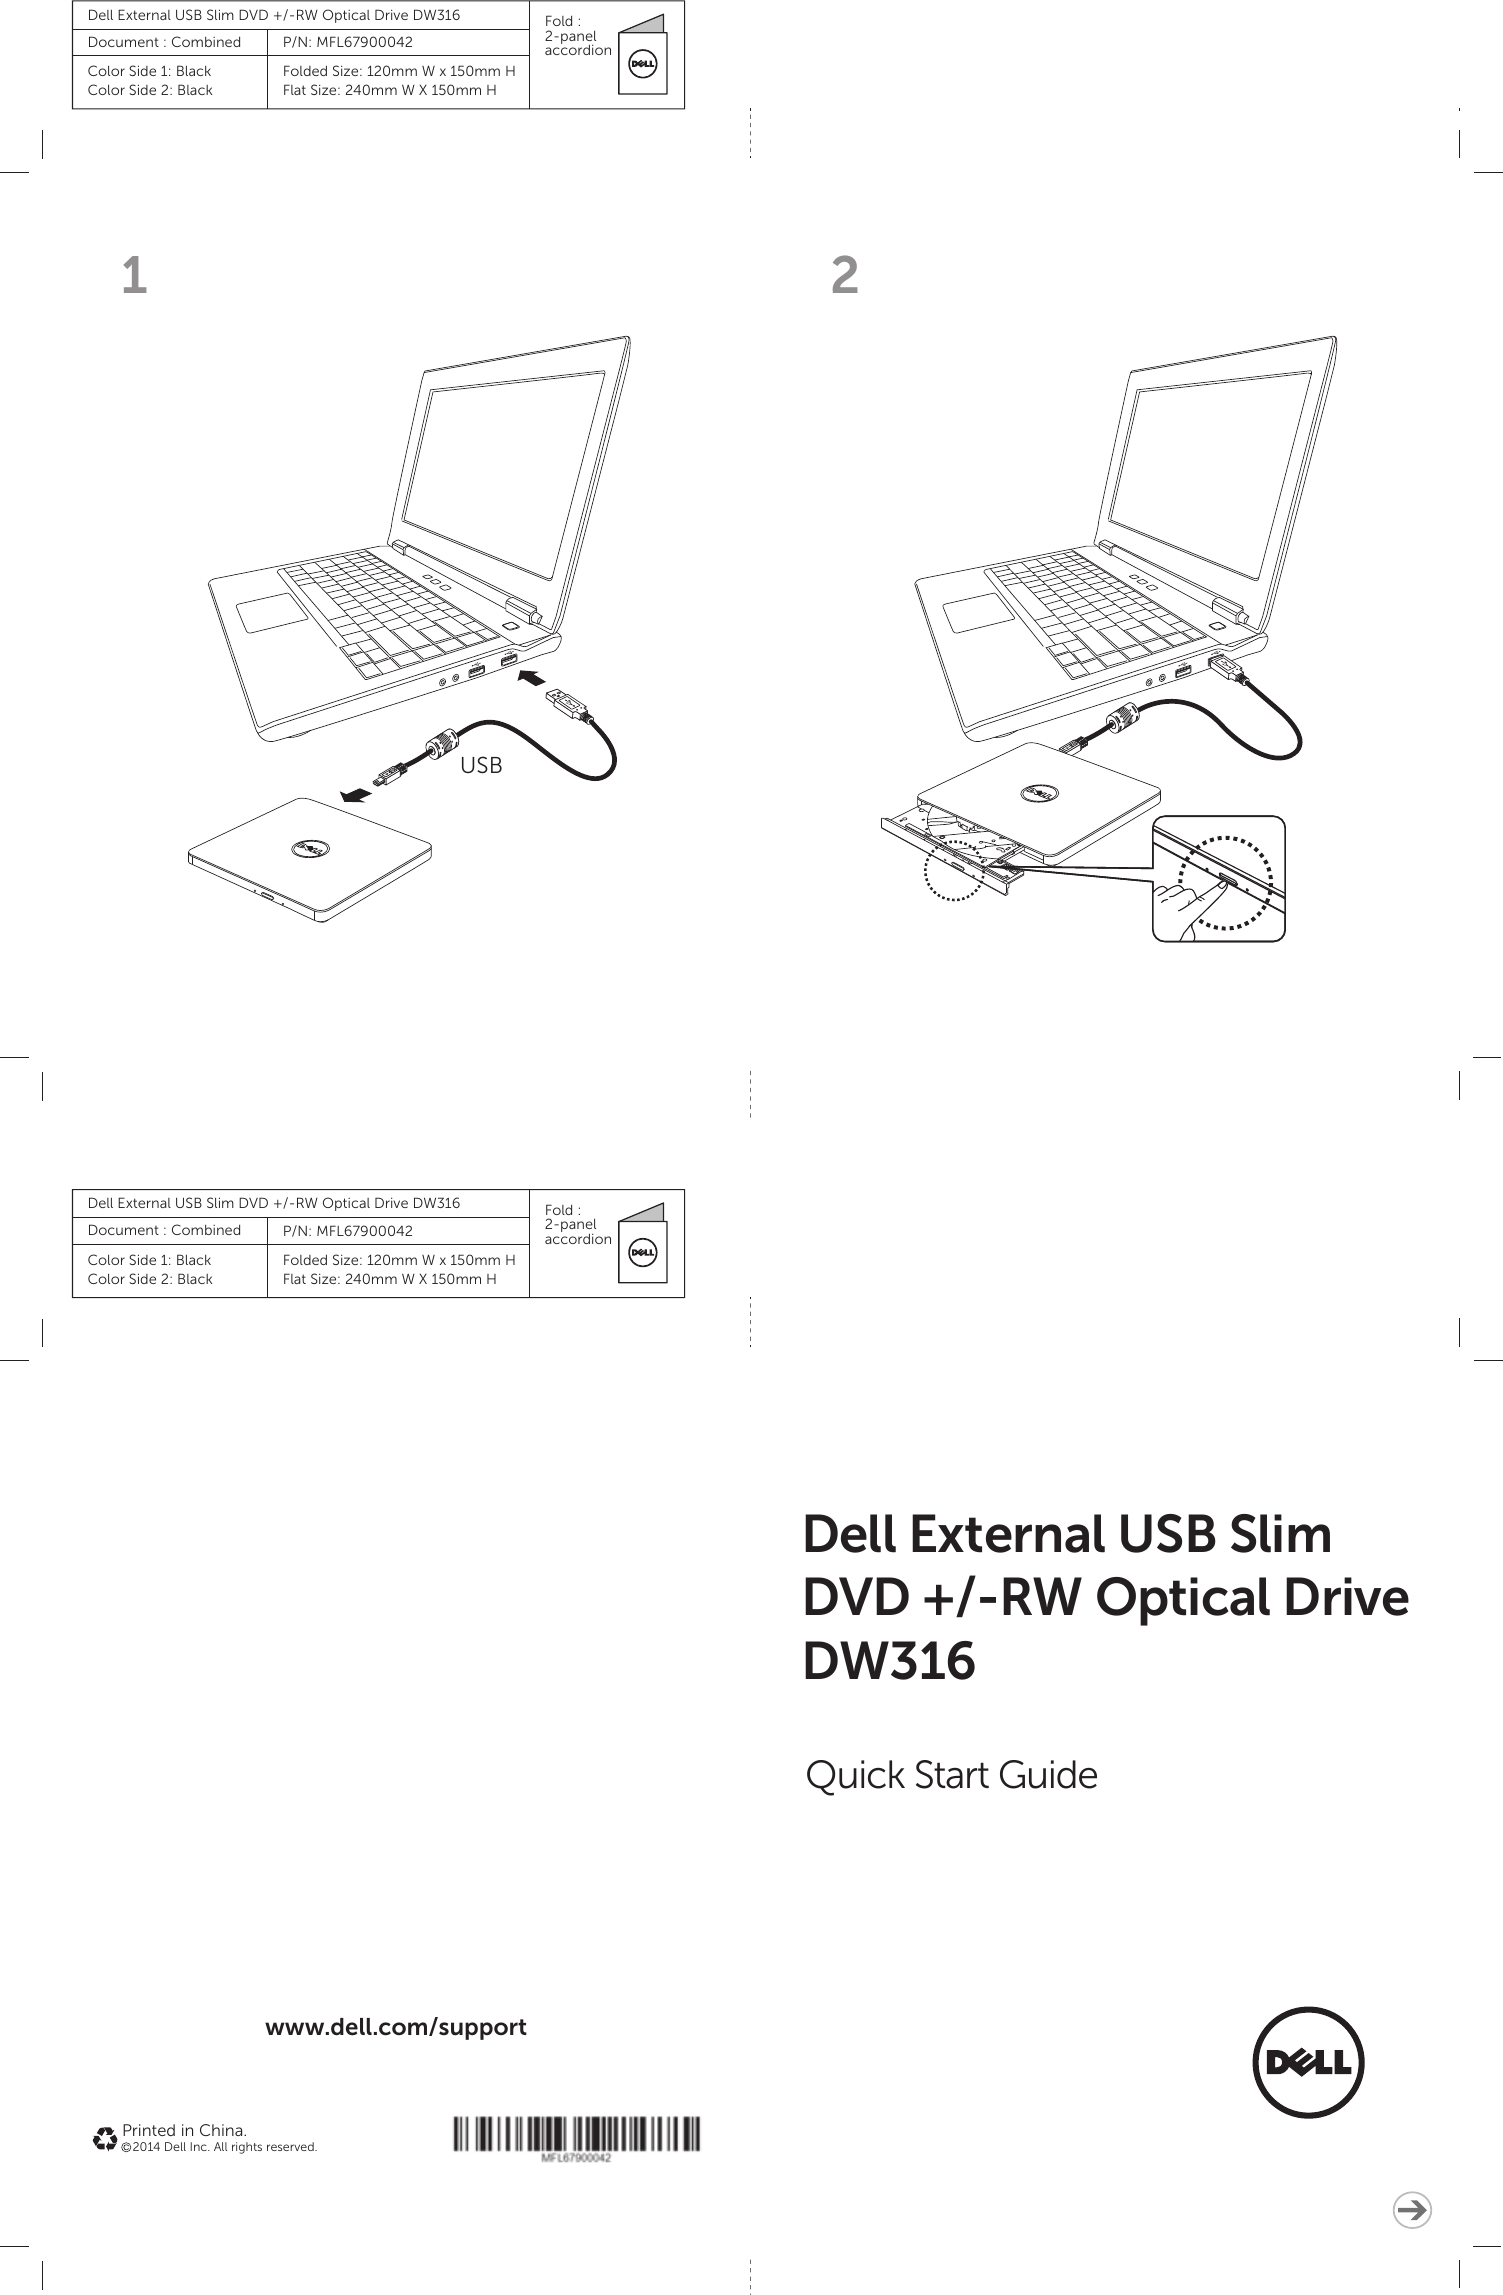 Page 1 of 2 - Dell External USB Slim DVD +/- RW Optical Drive DW 316 Quick Start Guide  1507995221dell-external-usb-slim-dvd-optical-drive-dw316 Setup En-us